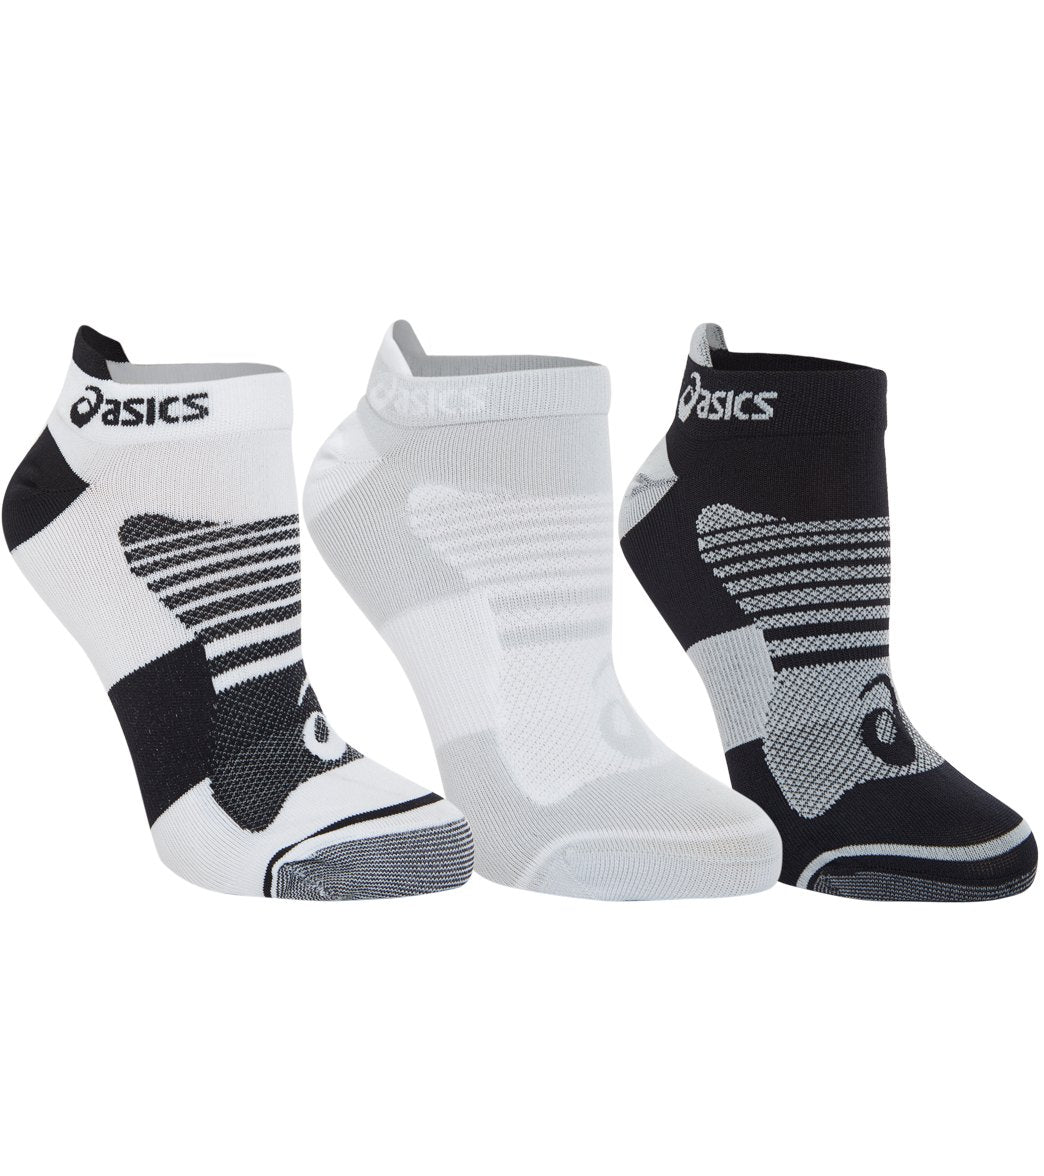 Asics Men's Quick Lyte Plus Socks 3 Pack - Brilliant White/Performance Black Small Size Small - Swimoutlet.com